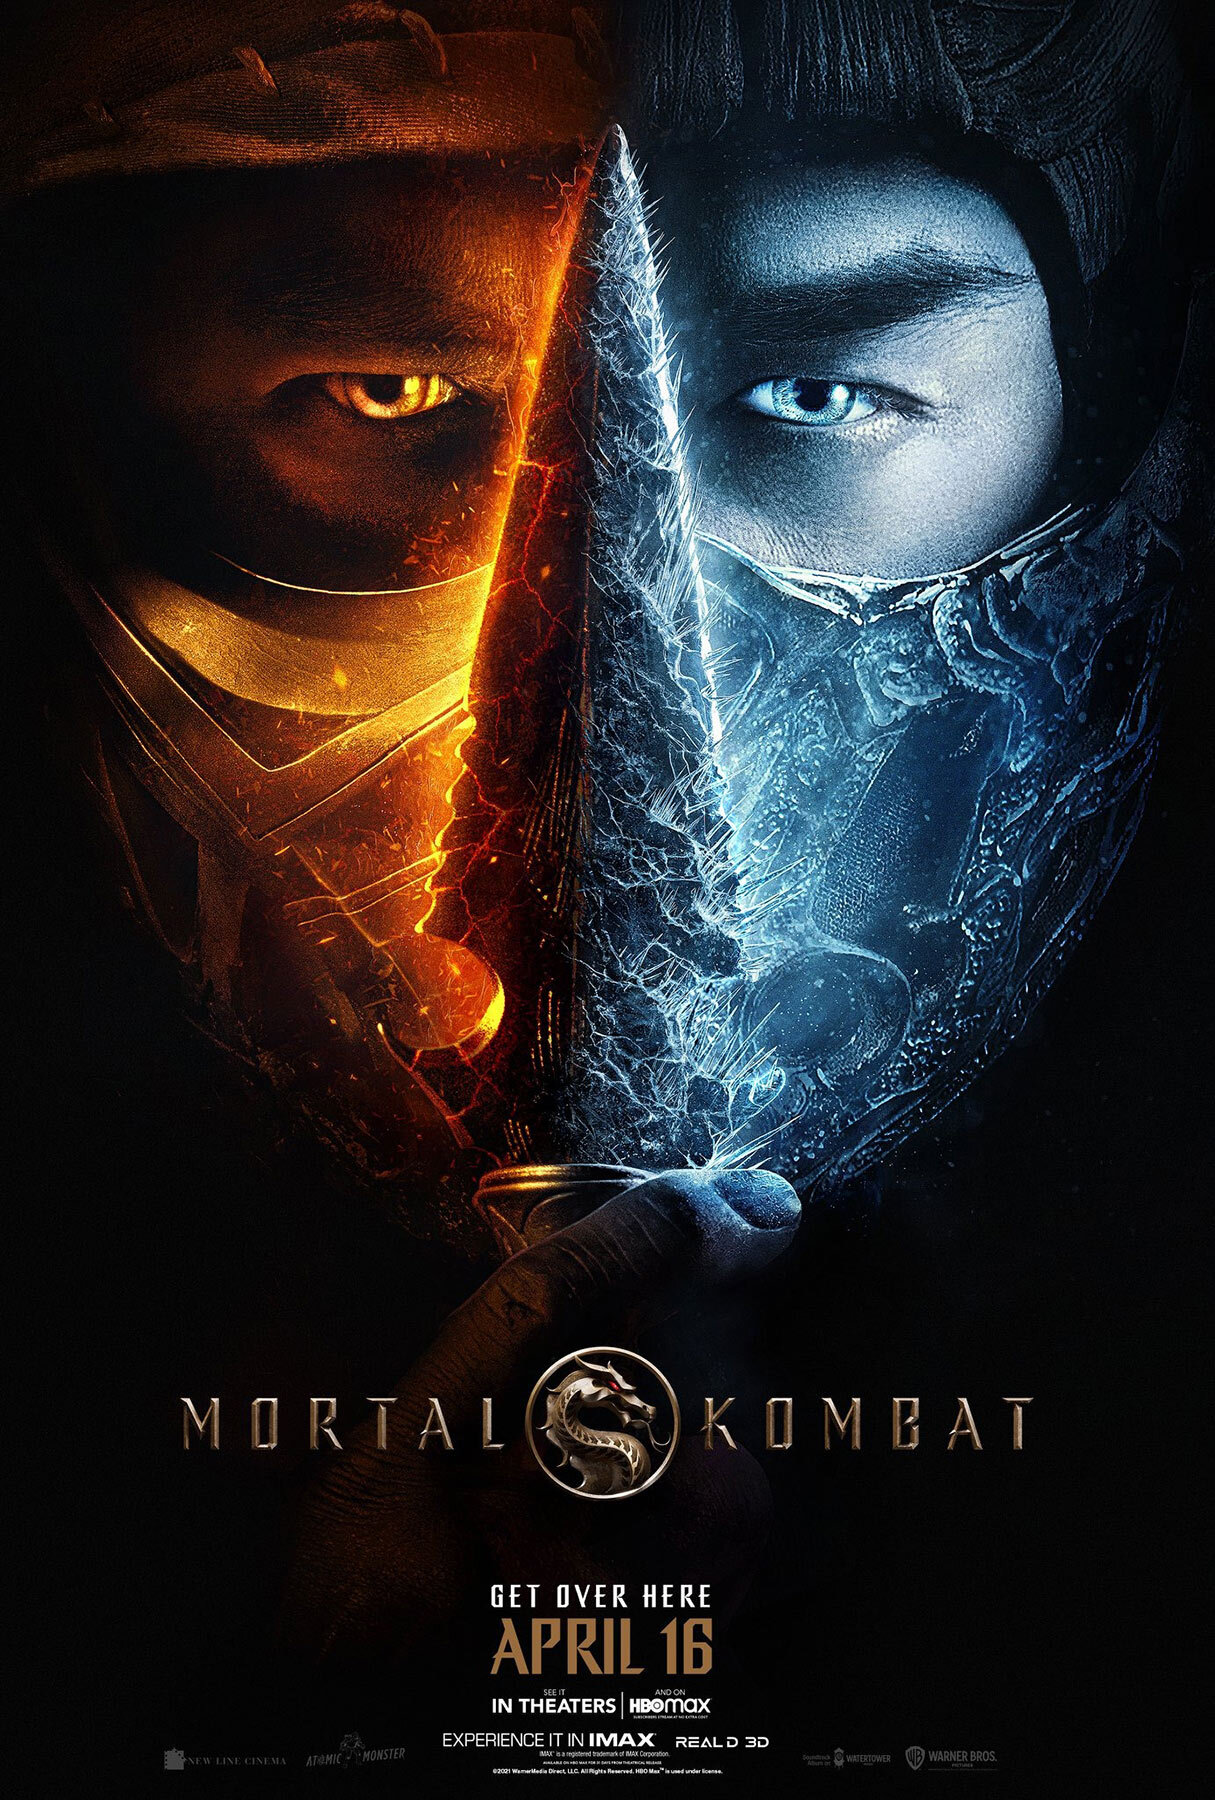 Mortal_Kombat_Poster-V2-web.jpg